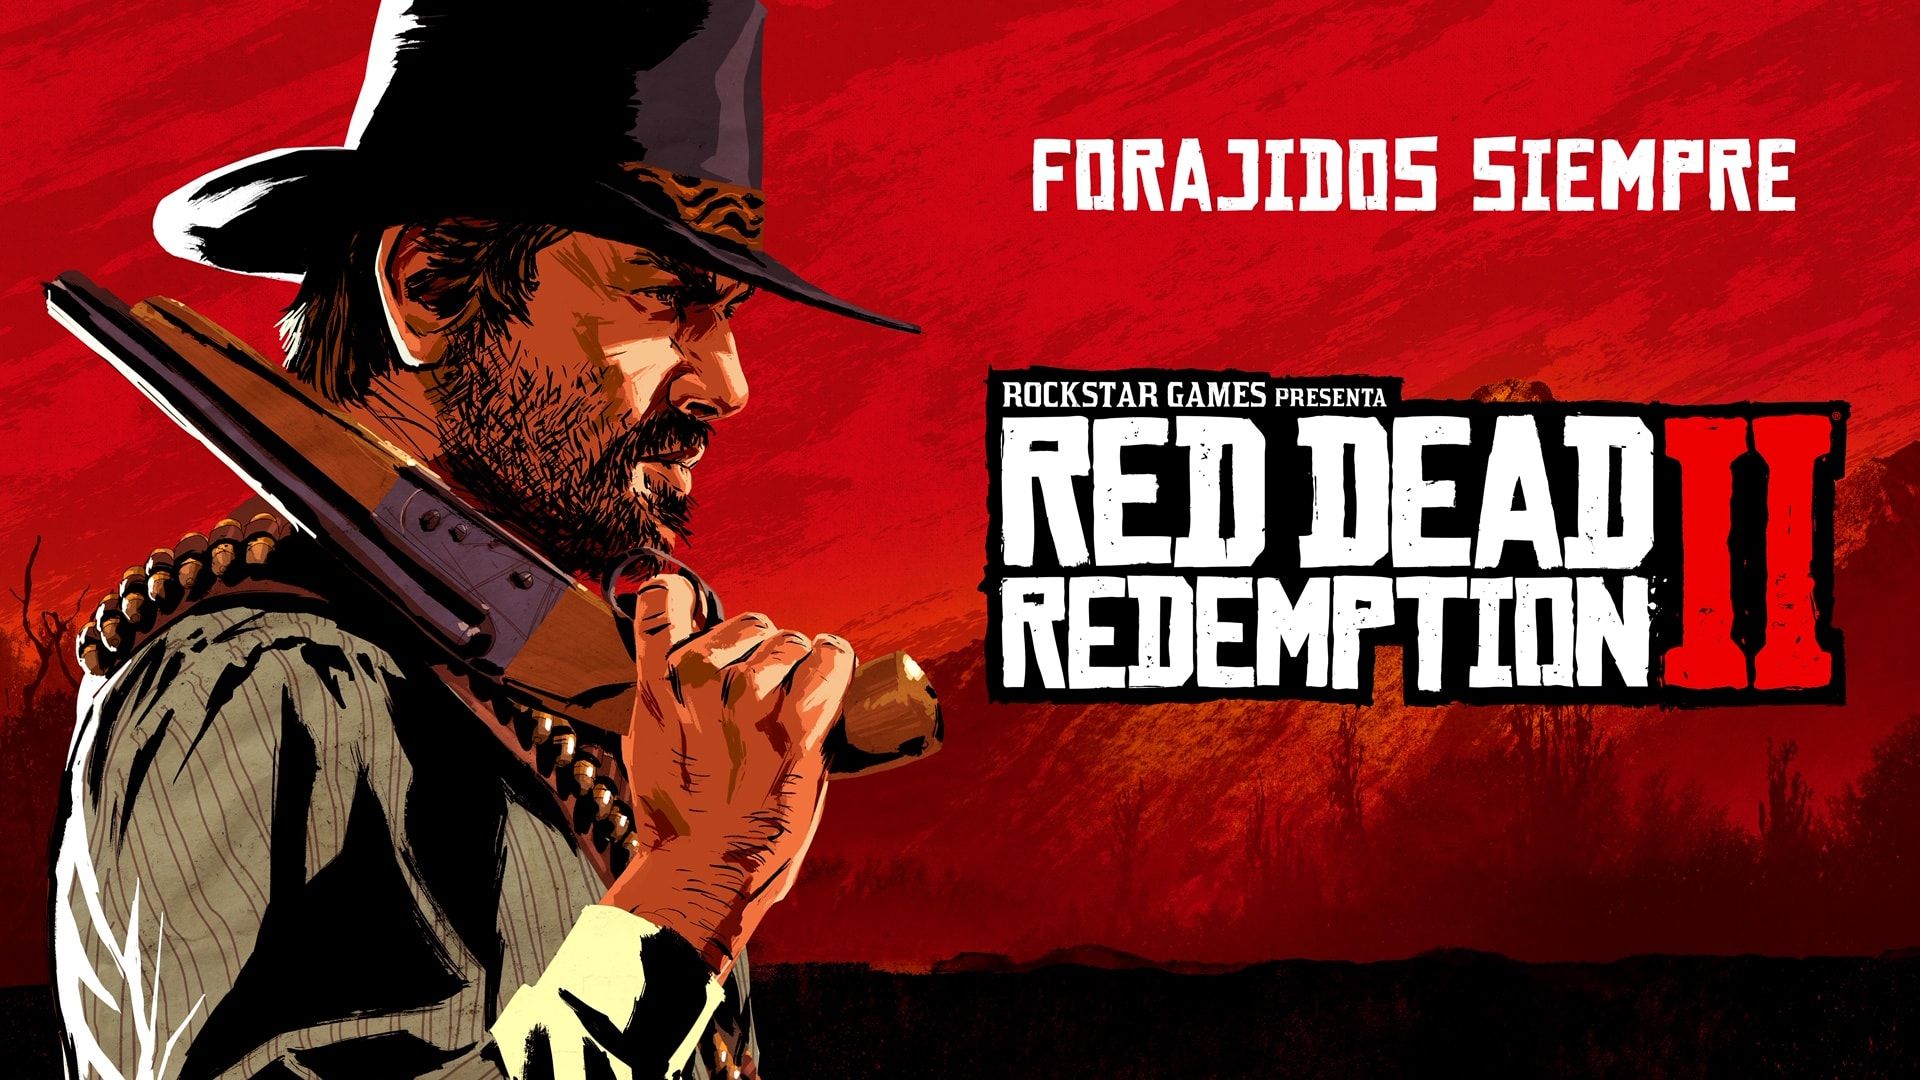 Jogo red dead redemption goty xbox 360 e xbox one rockstar games